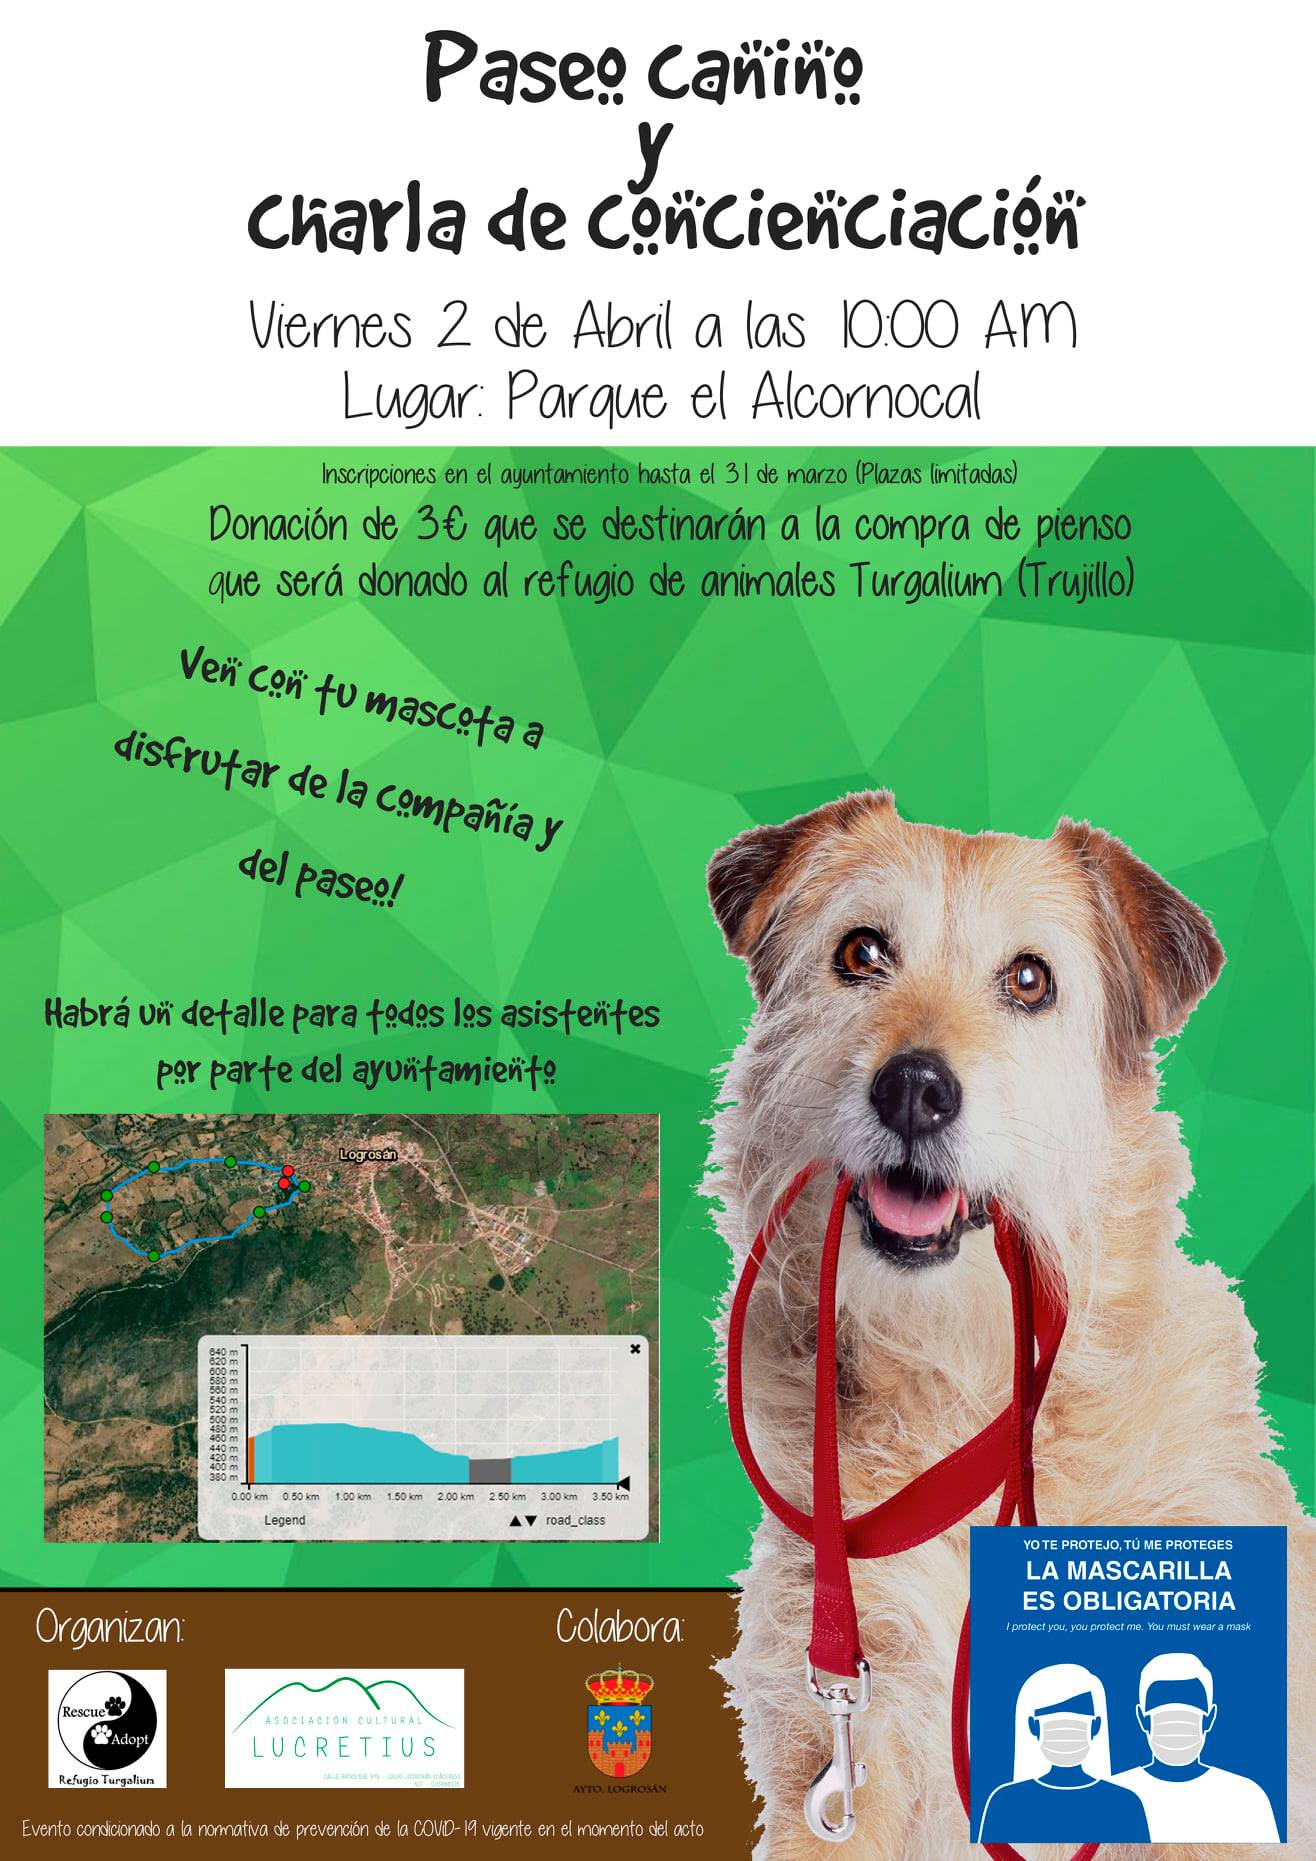 Paseo canino y charla de concienciación (2021) - Logrosán (Cáceres)